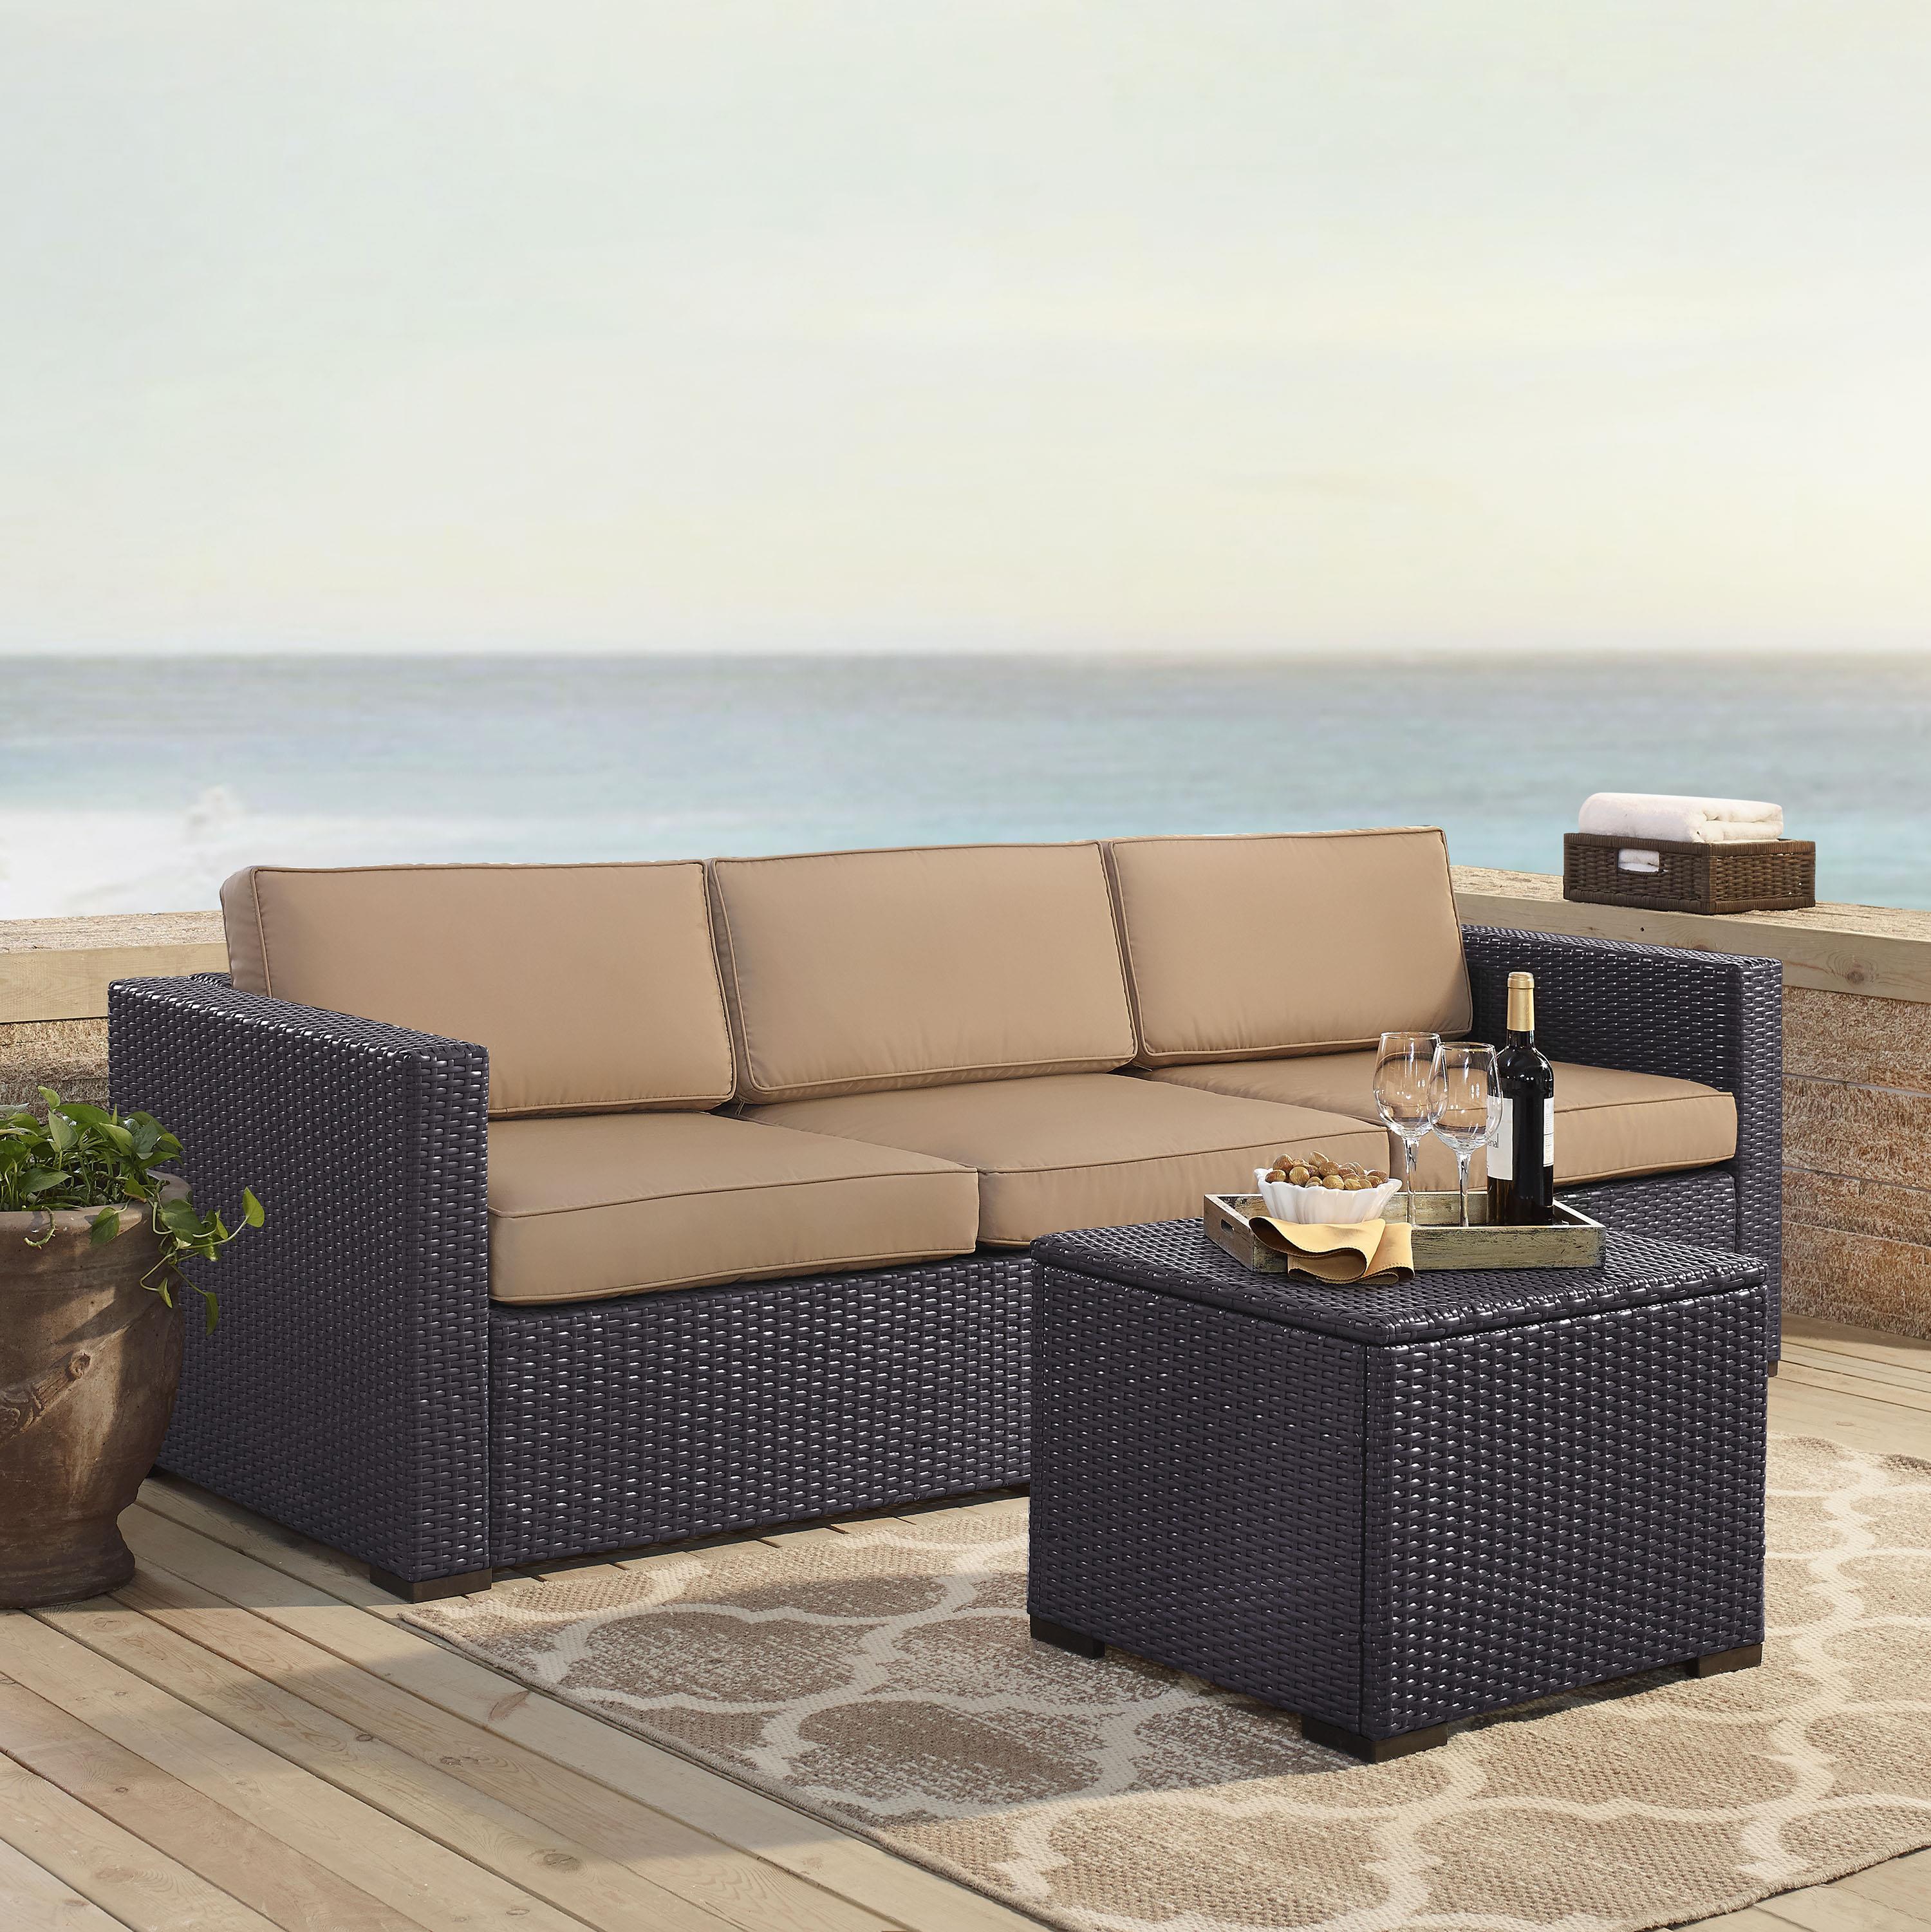 Crosley Furniture Biscayne 3 Piece Metal Patio Sofa Set in Brown/Mocha - image 4 of 4